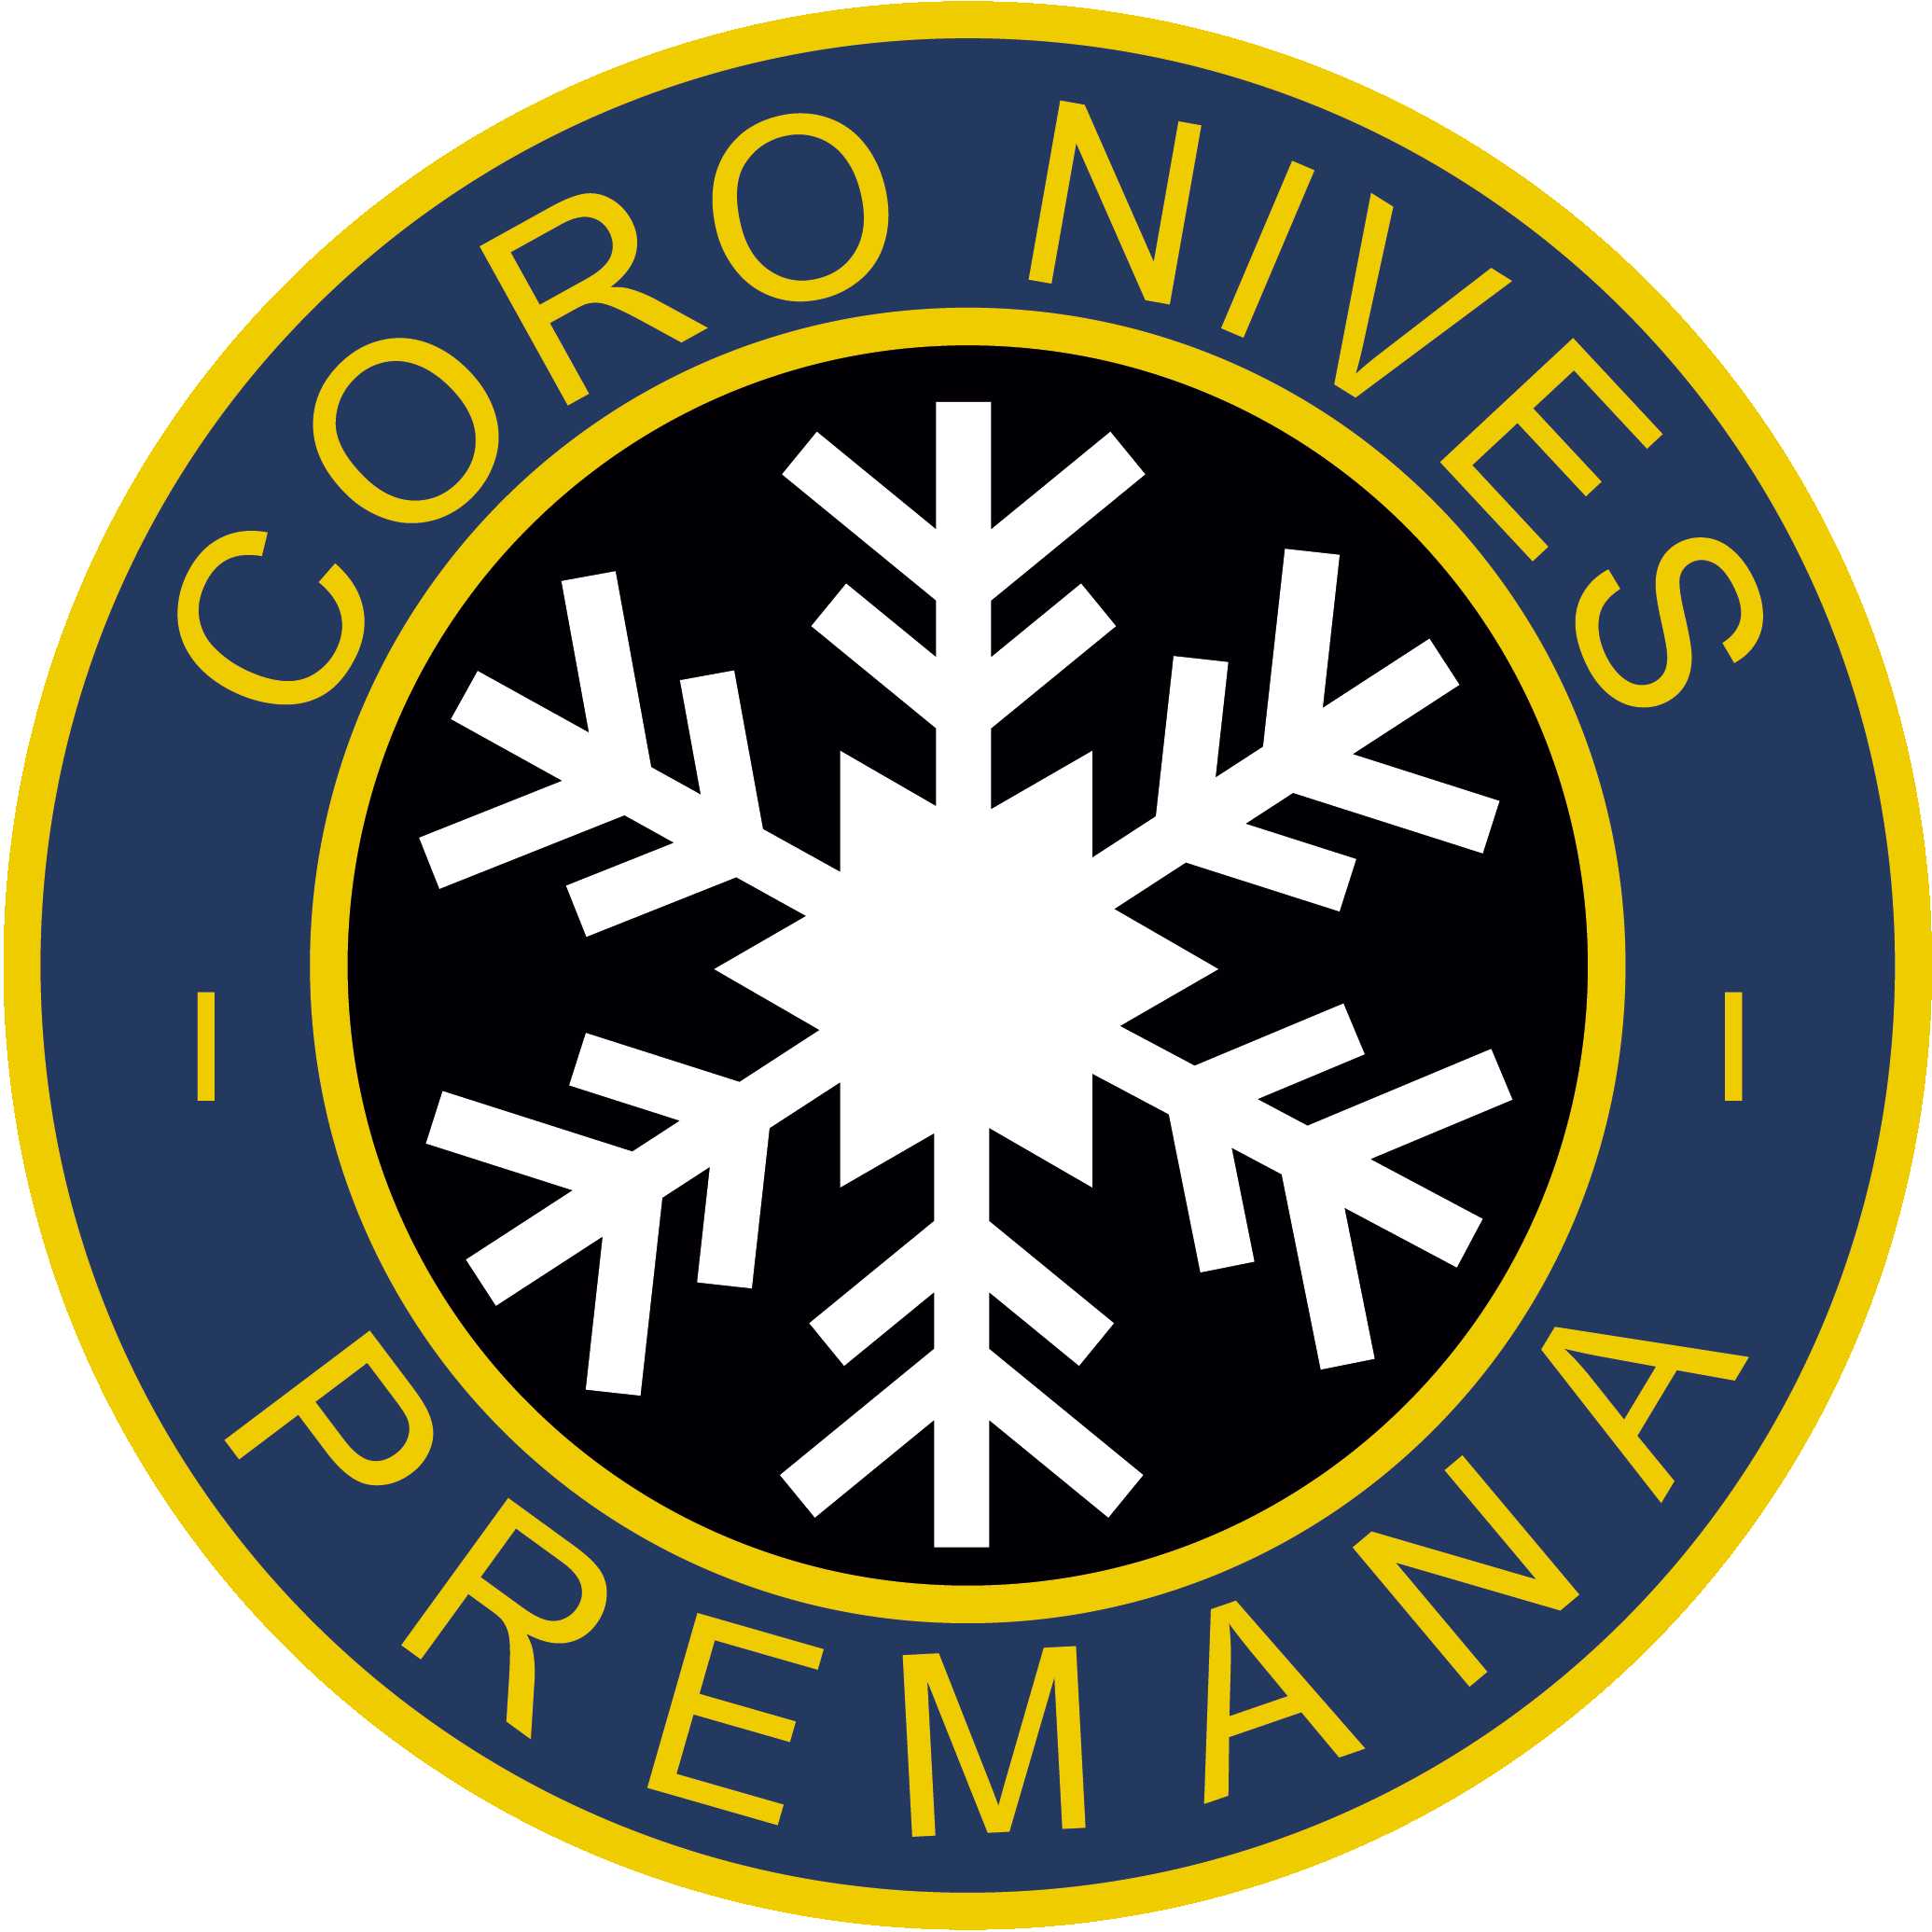 Logo Coro Nives